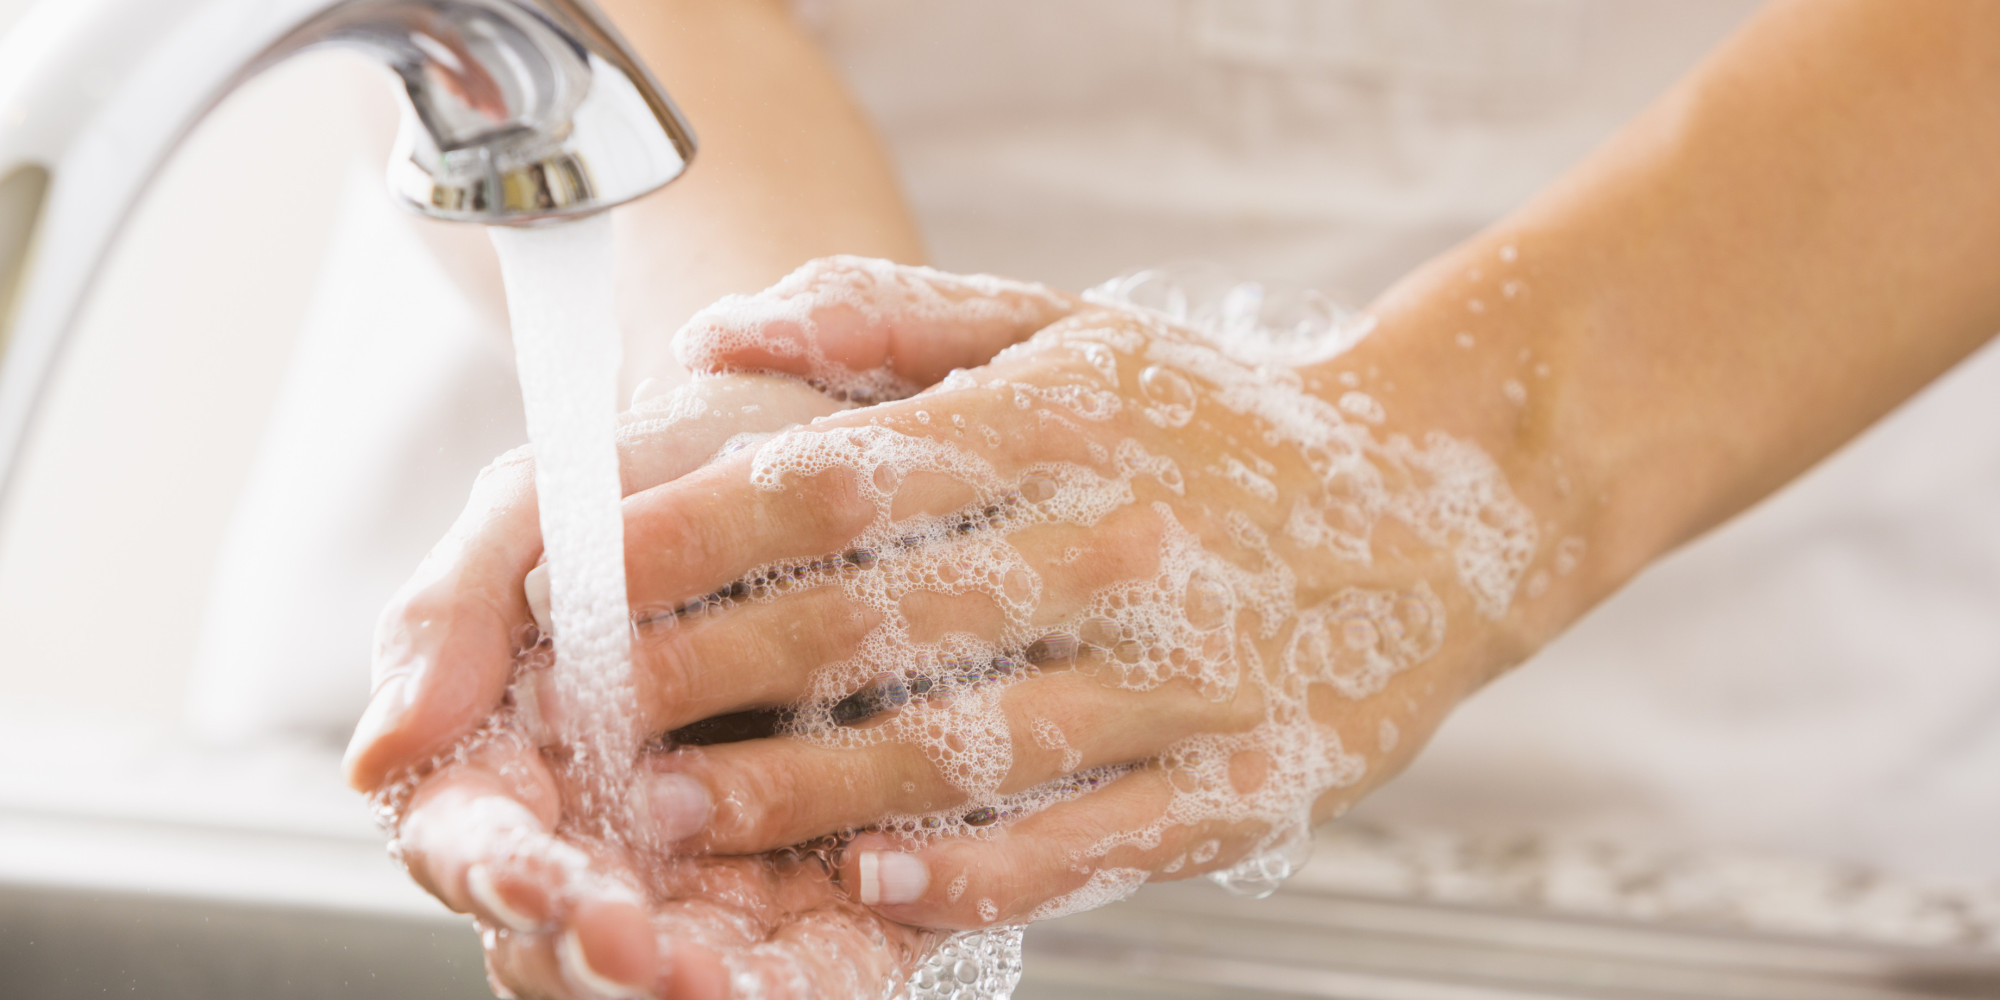 handwashing - Newsletters - ProviDRs Care